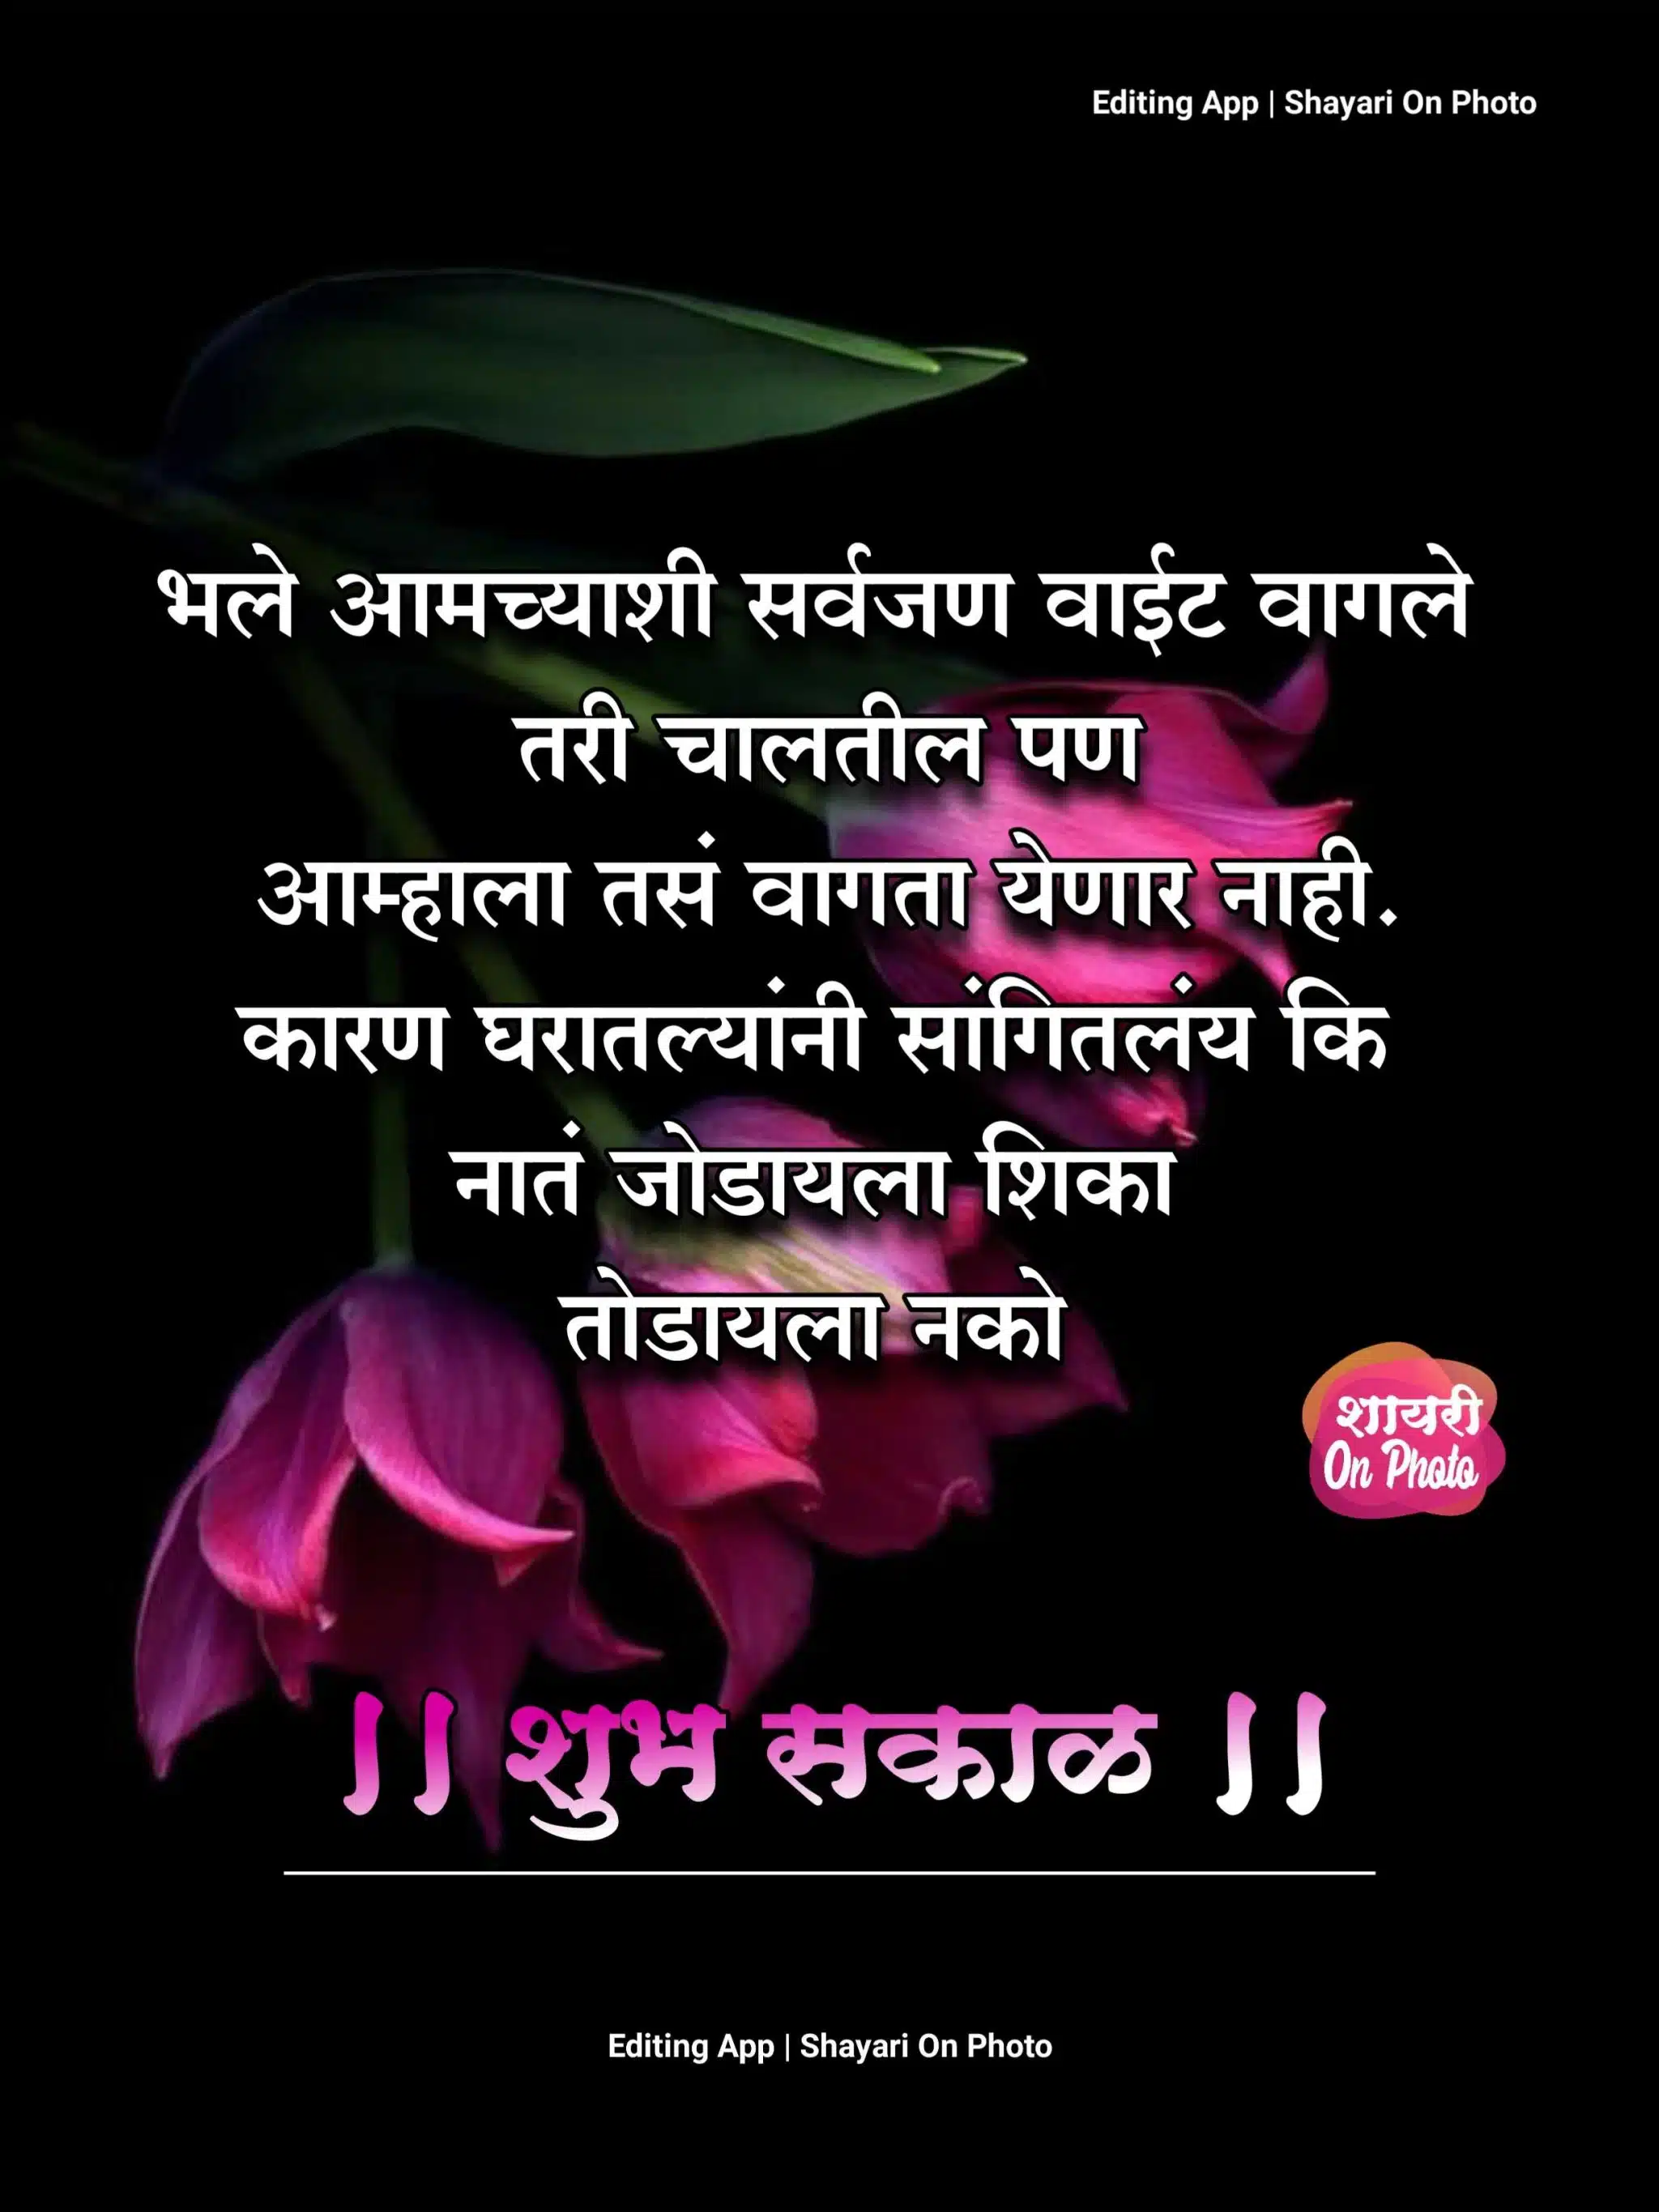 Good Morning Attitude Quotes In Marathi